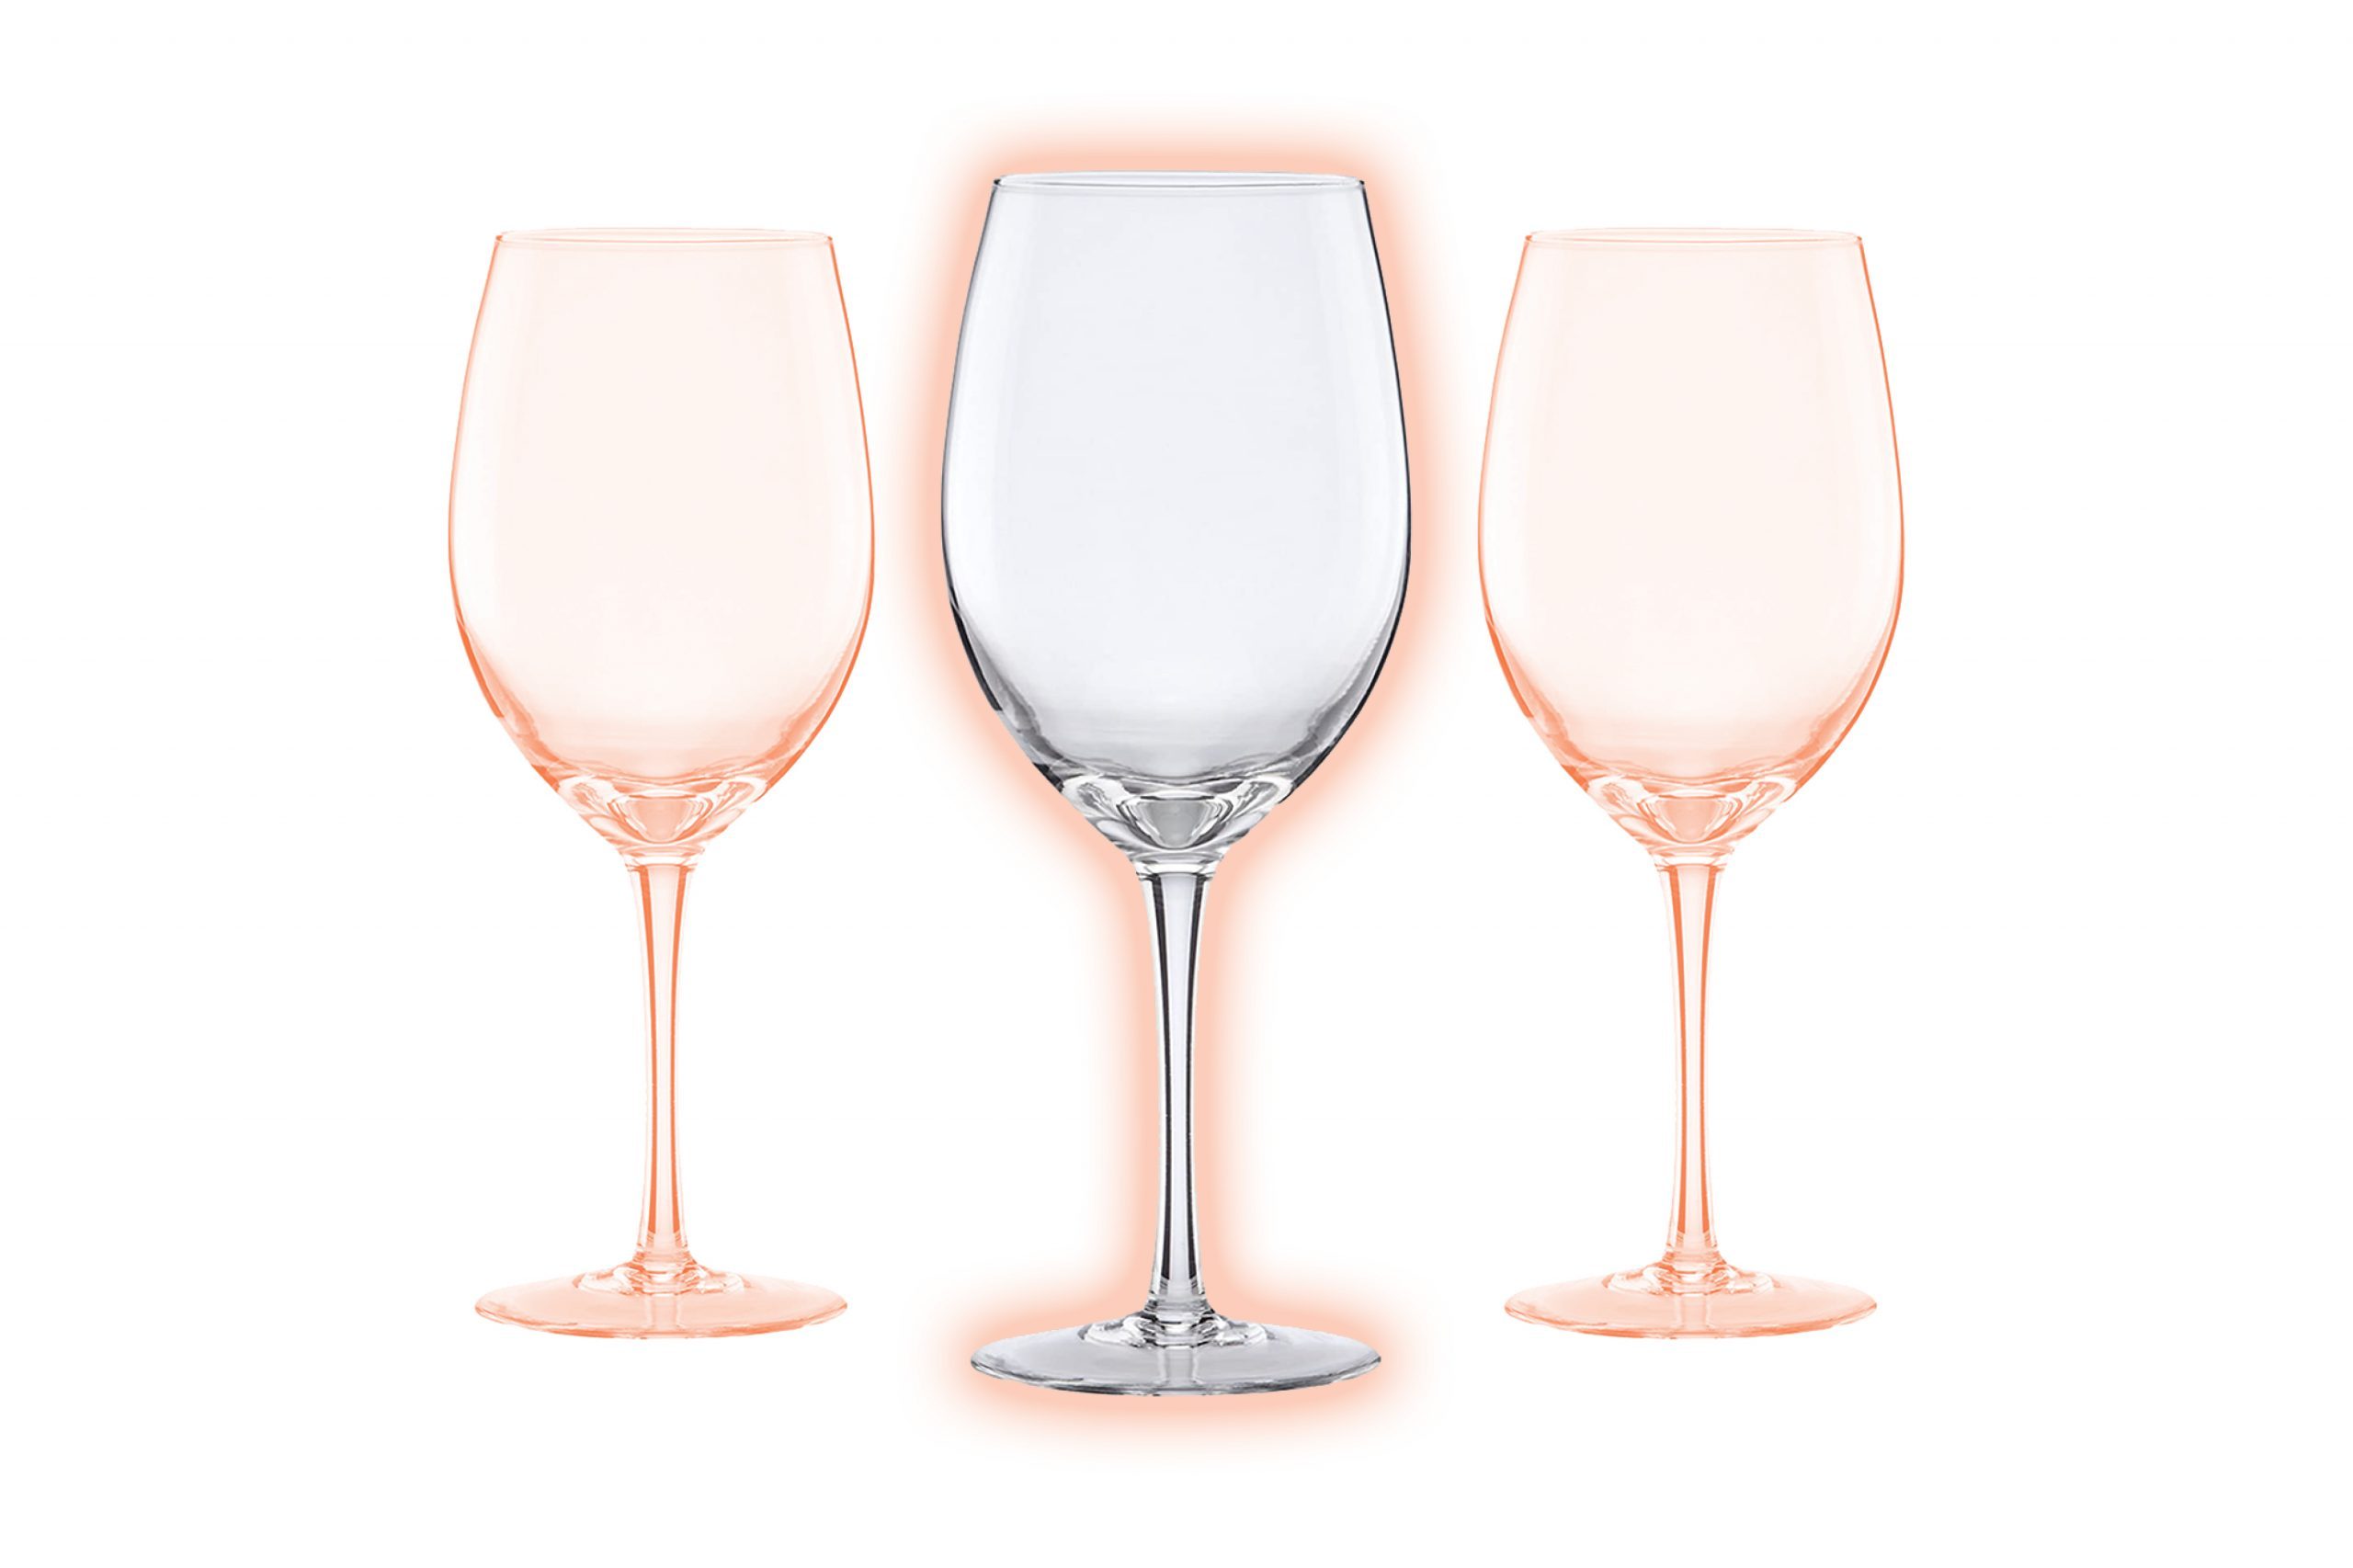 https://www.tasteofhome.com/wp-content/uploads/2021/09/test-kitchen-preferred-the-best-lenox-tuscany-wine-glass-scaled.jpg?fit=680%2C454